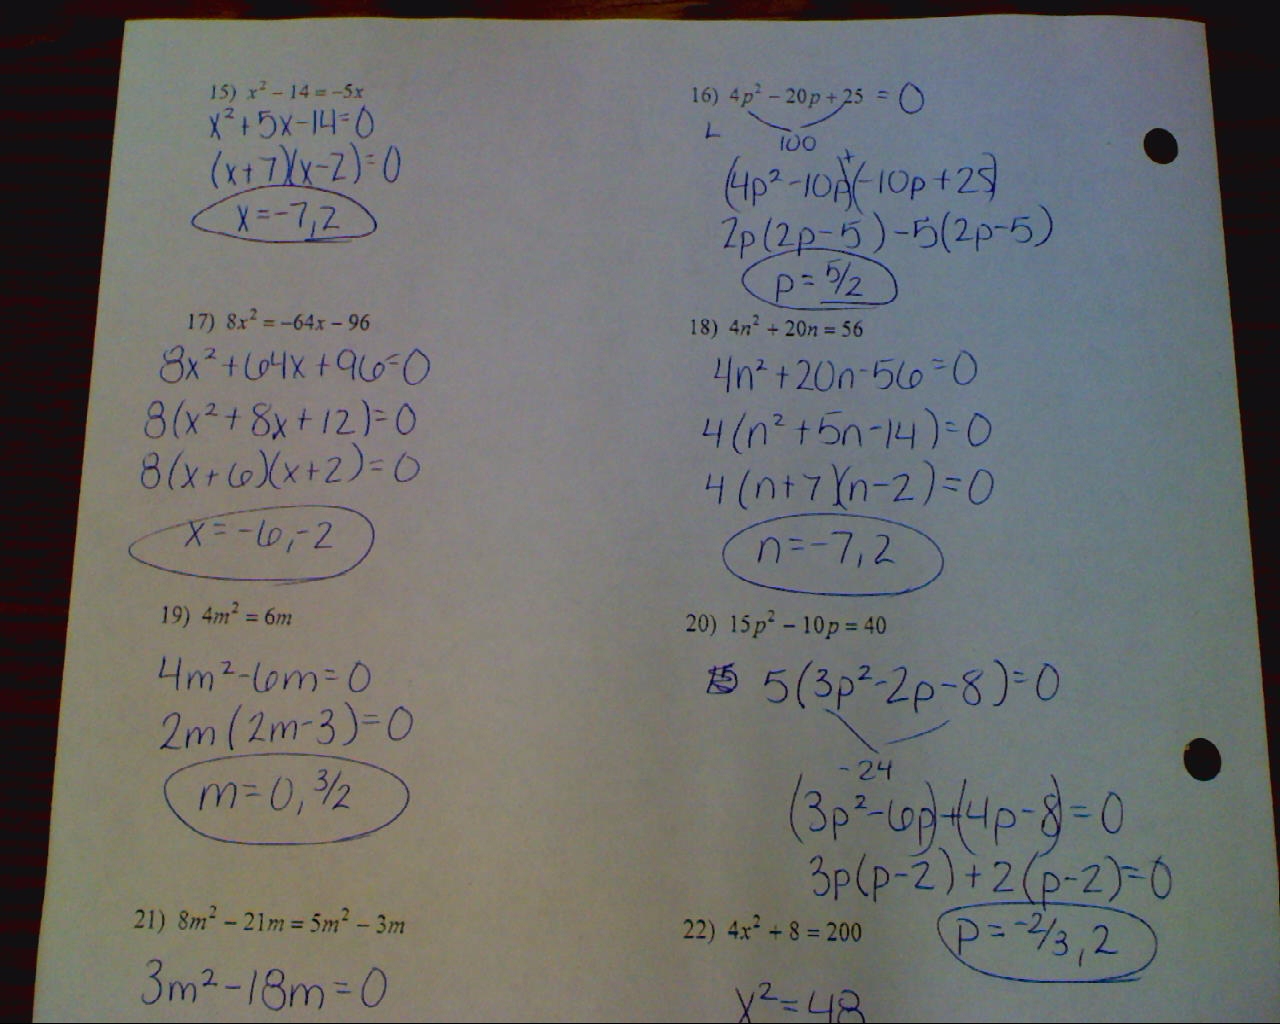 factoring trinomials worksheet 3p^2-2p-5